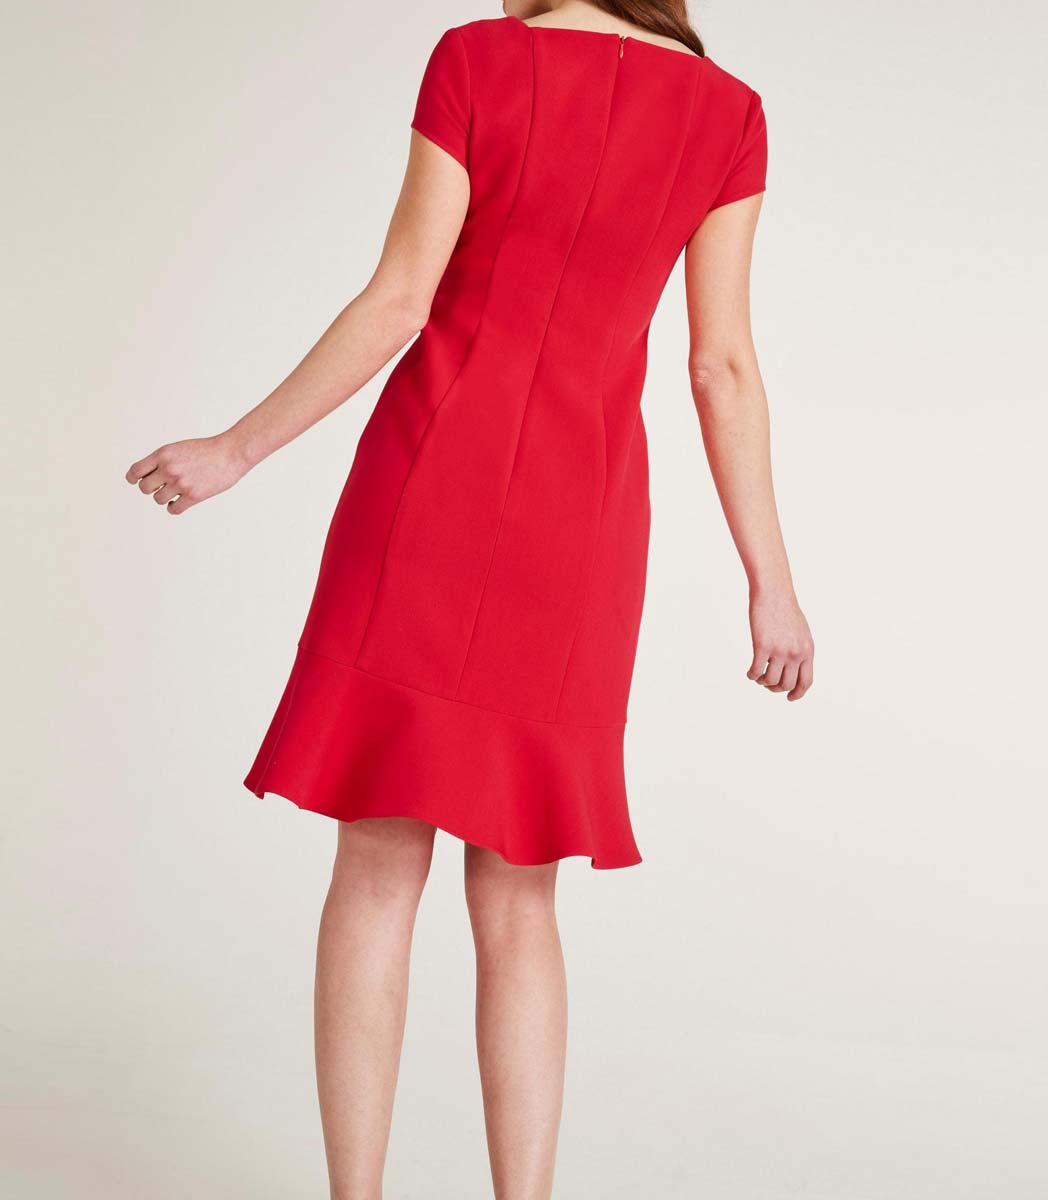 Ashley Brooke Damen Designer-Optimizer-Etuikleid, rot